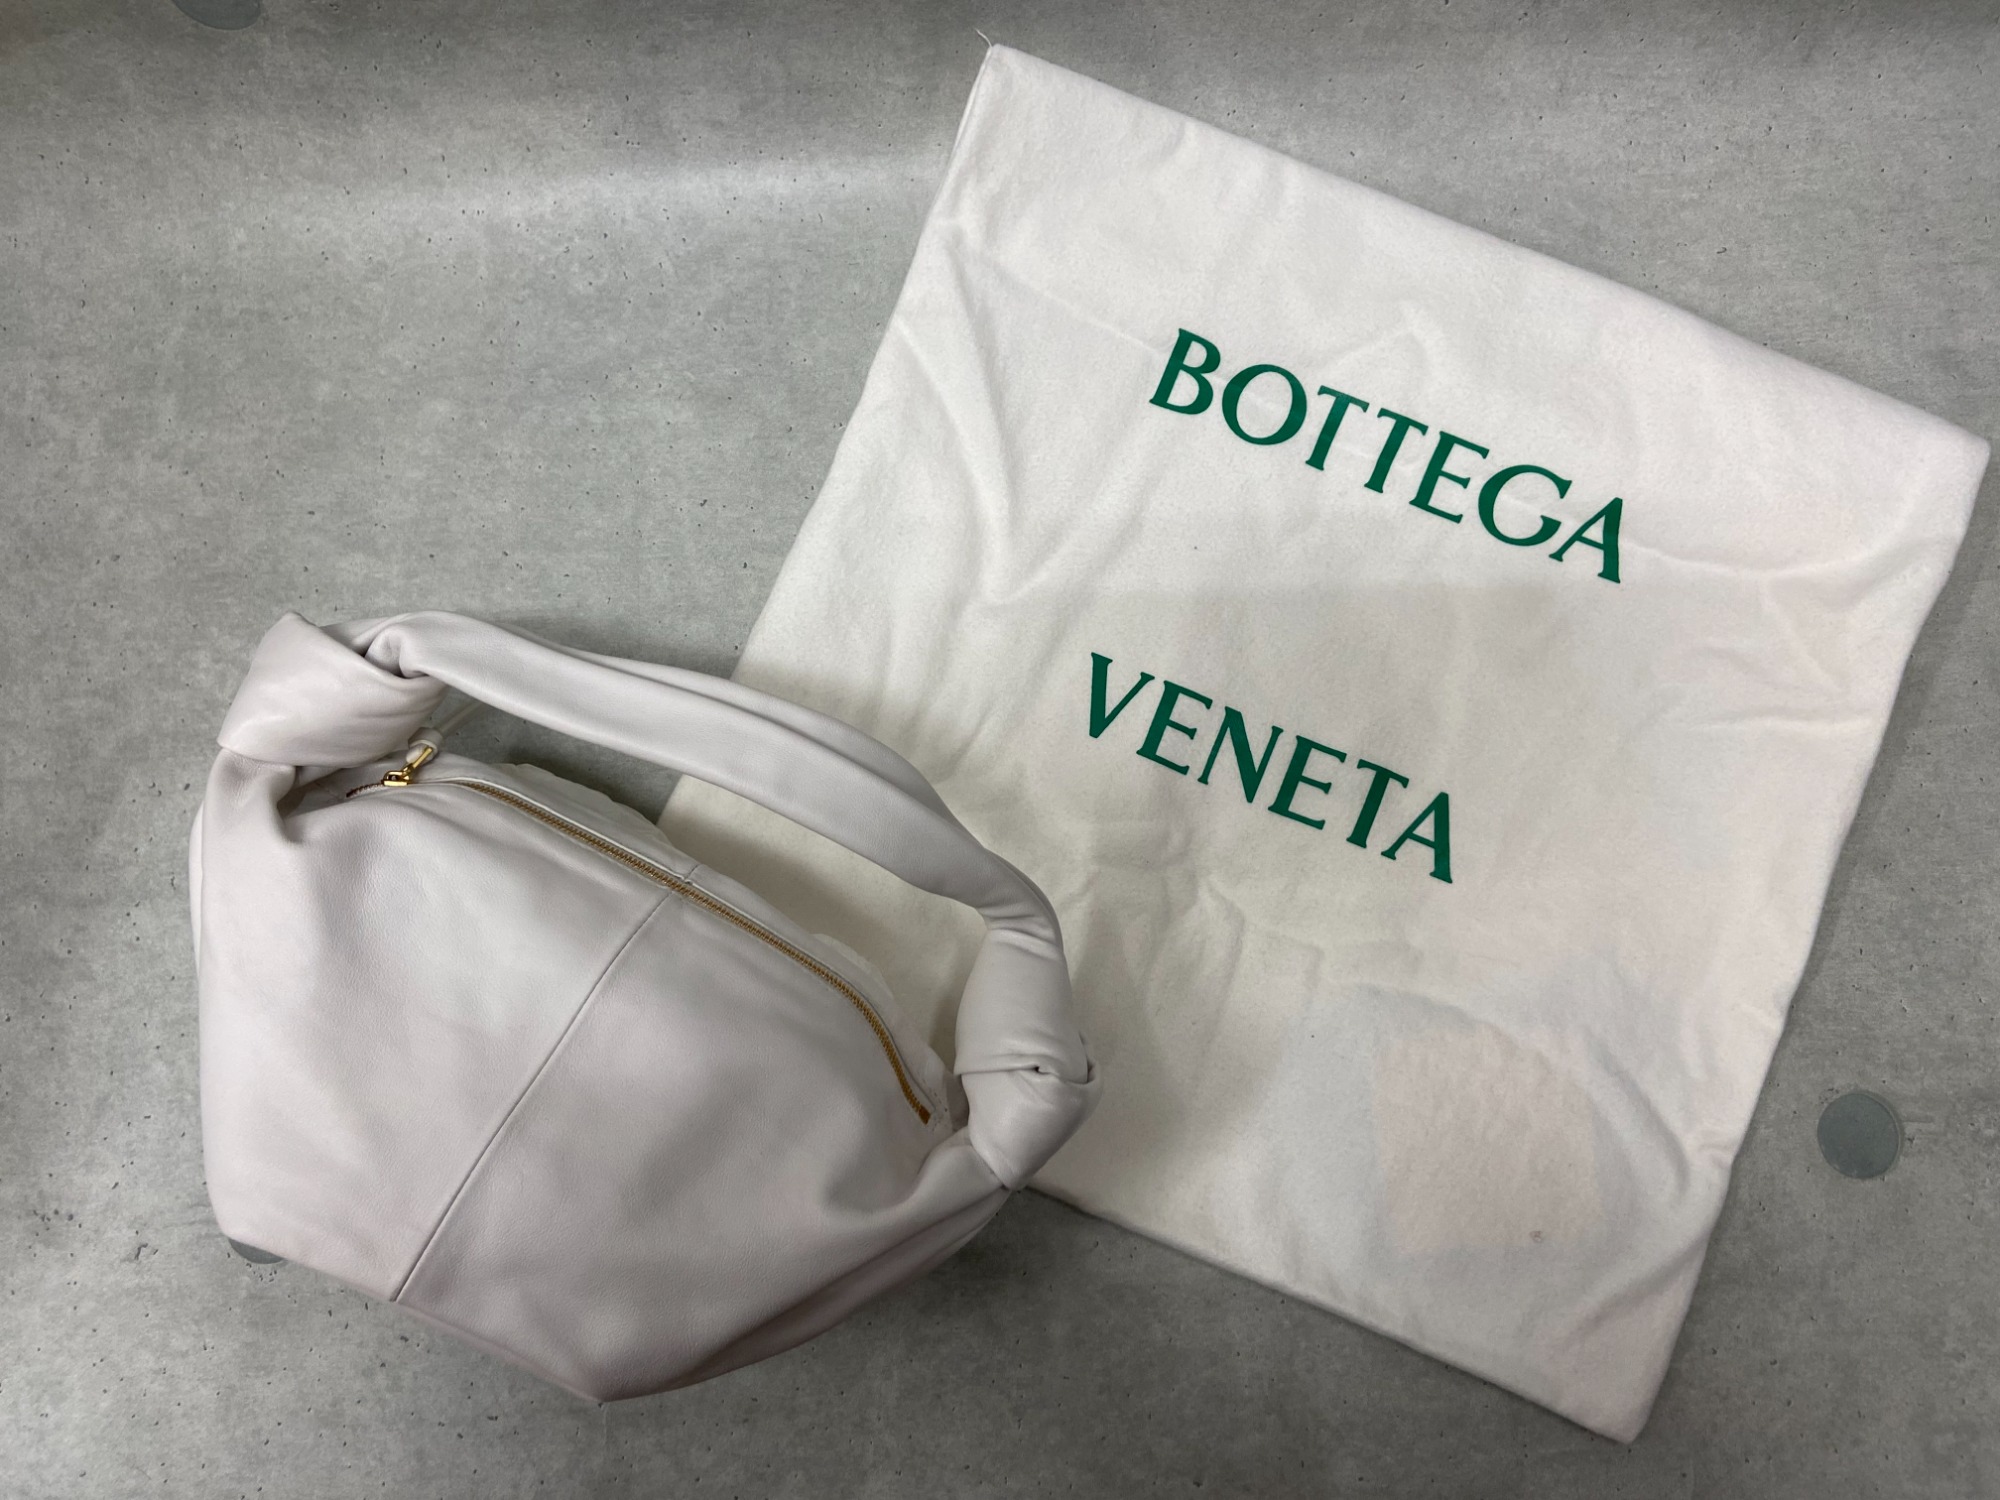 BOTTEGA VENETA/ボッテガ・ヴェネタ】の、Double Knot トップハンドル